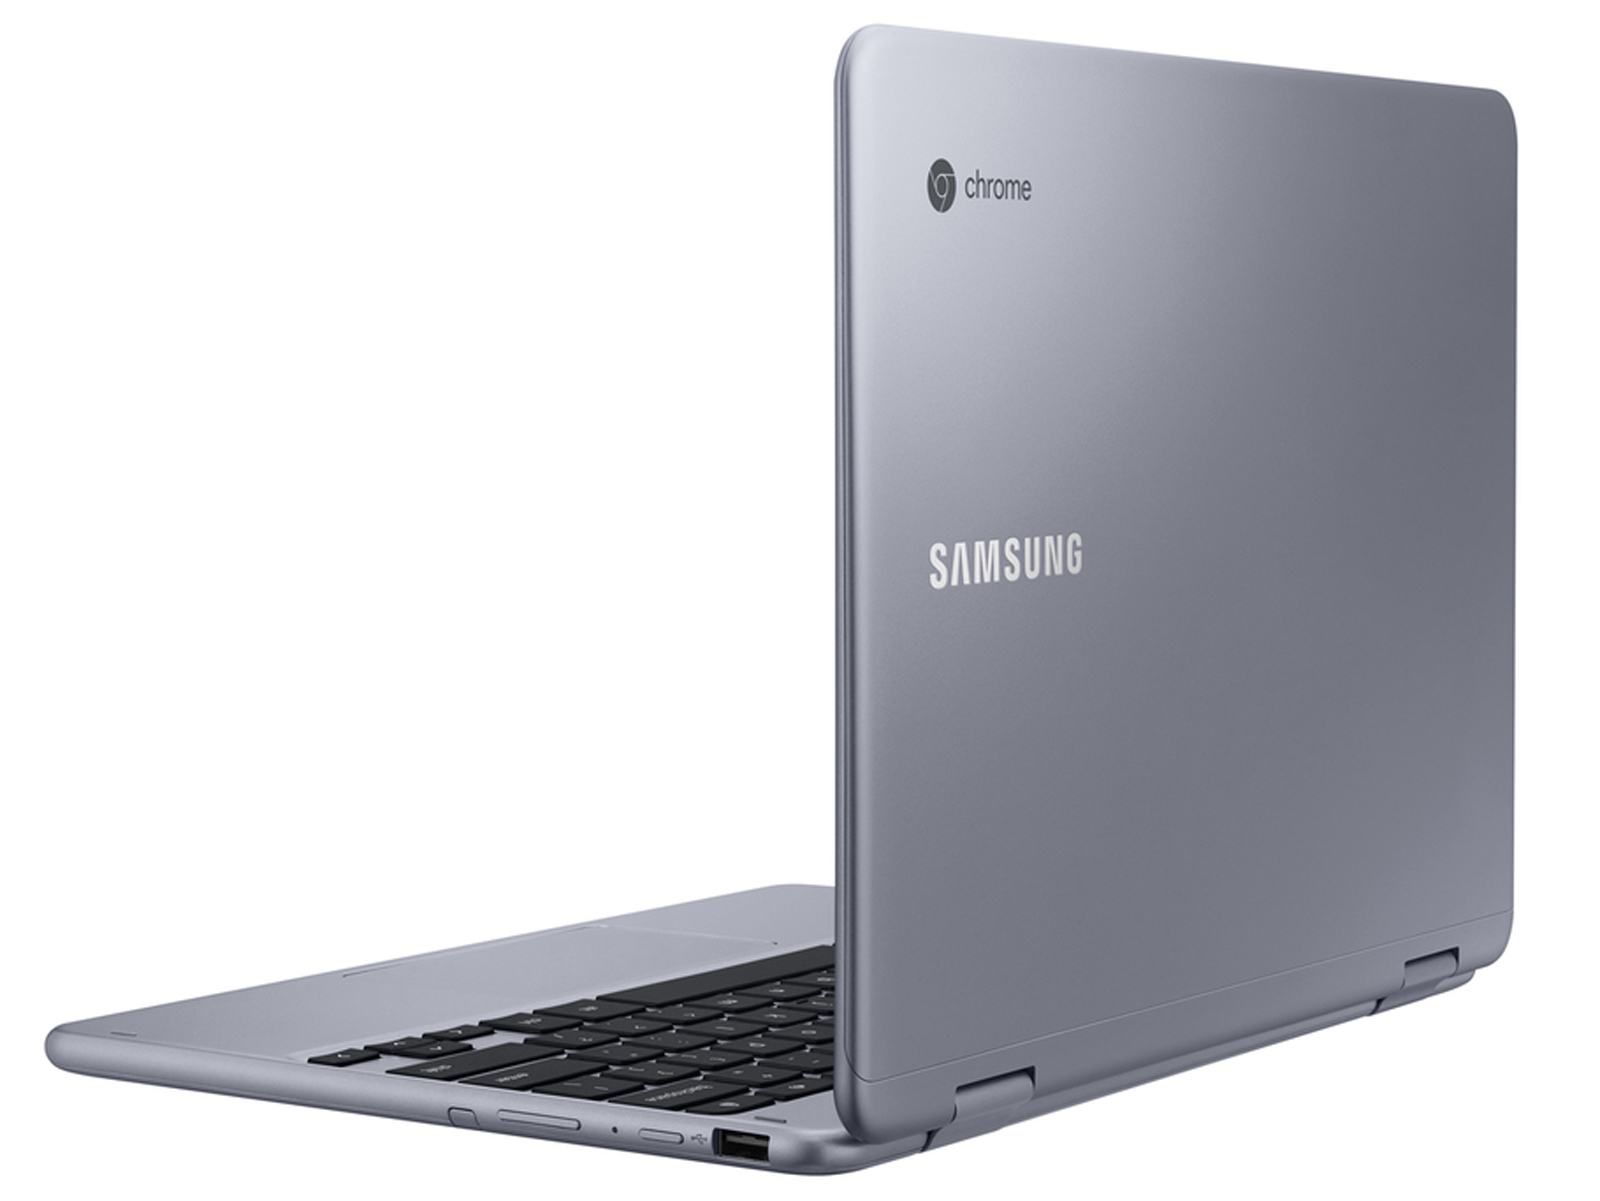 Samsung Chromebook Plus Lte Chromebooks Xe525qbb K01us Samsung Us